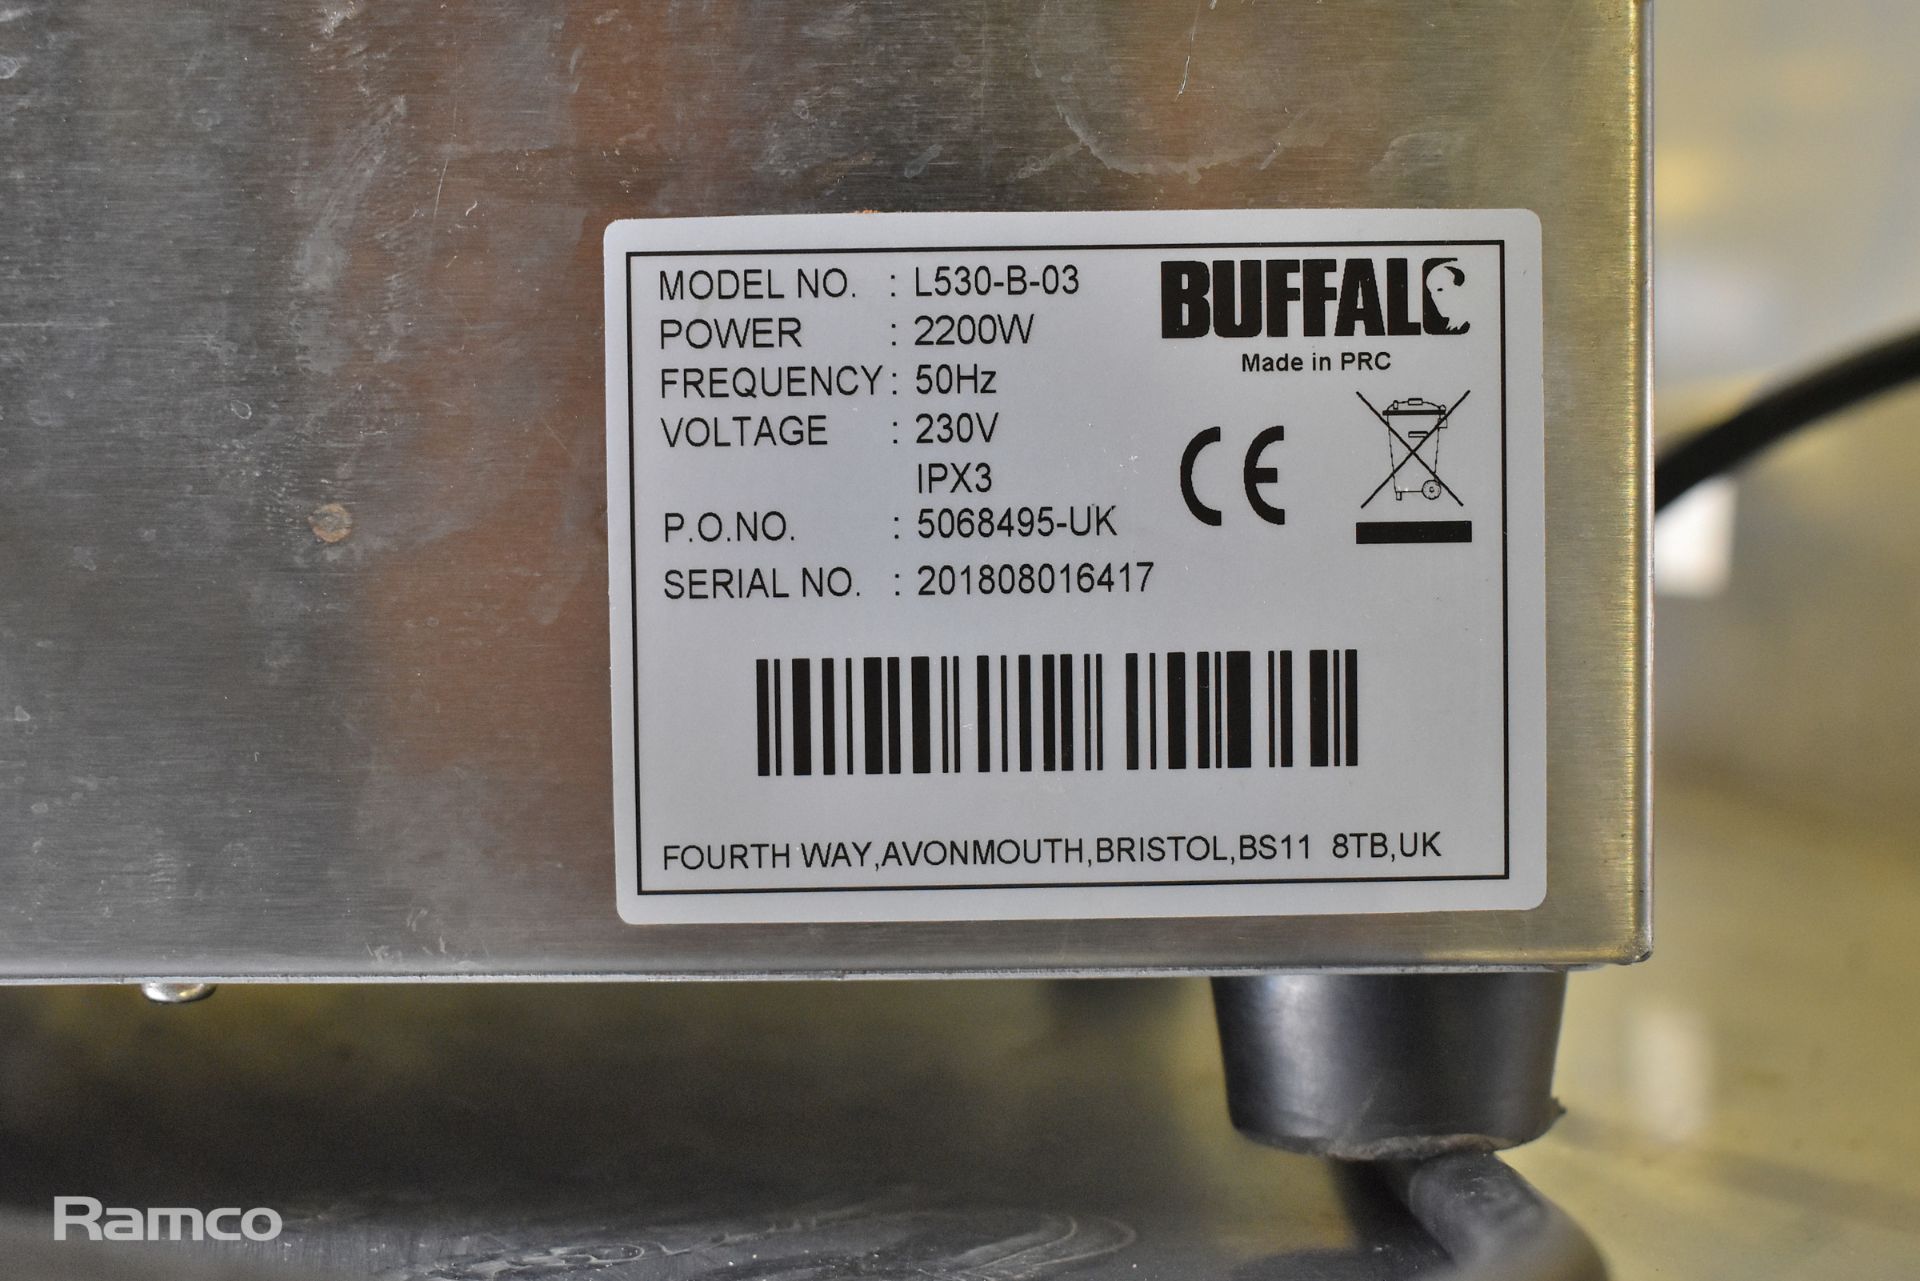 Buffalo L530-B-03 panini grill - Image 4 of 5